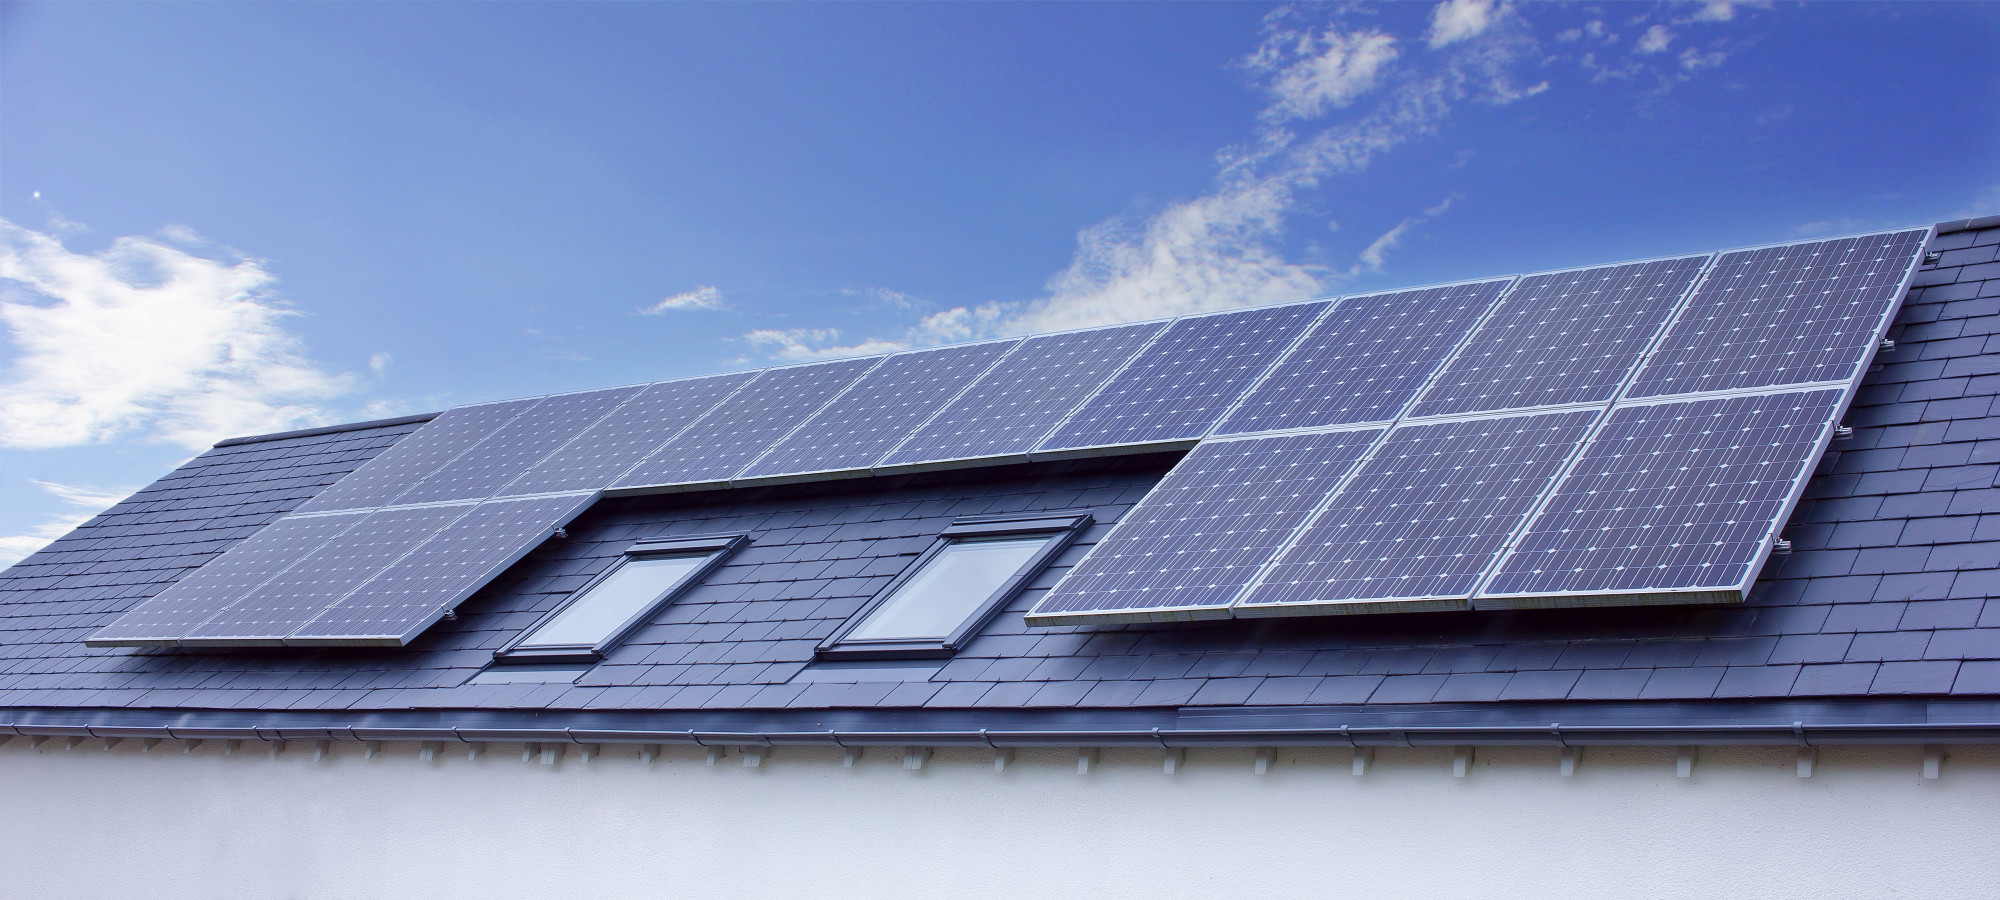 Solar Panels On House Roof. Su